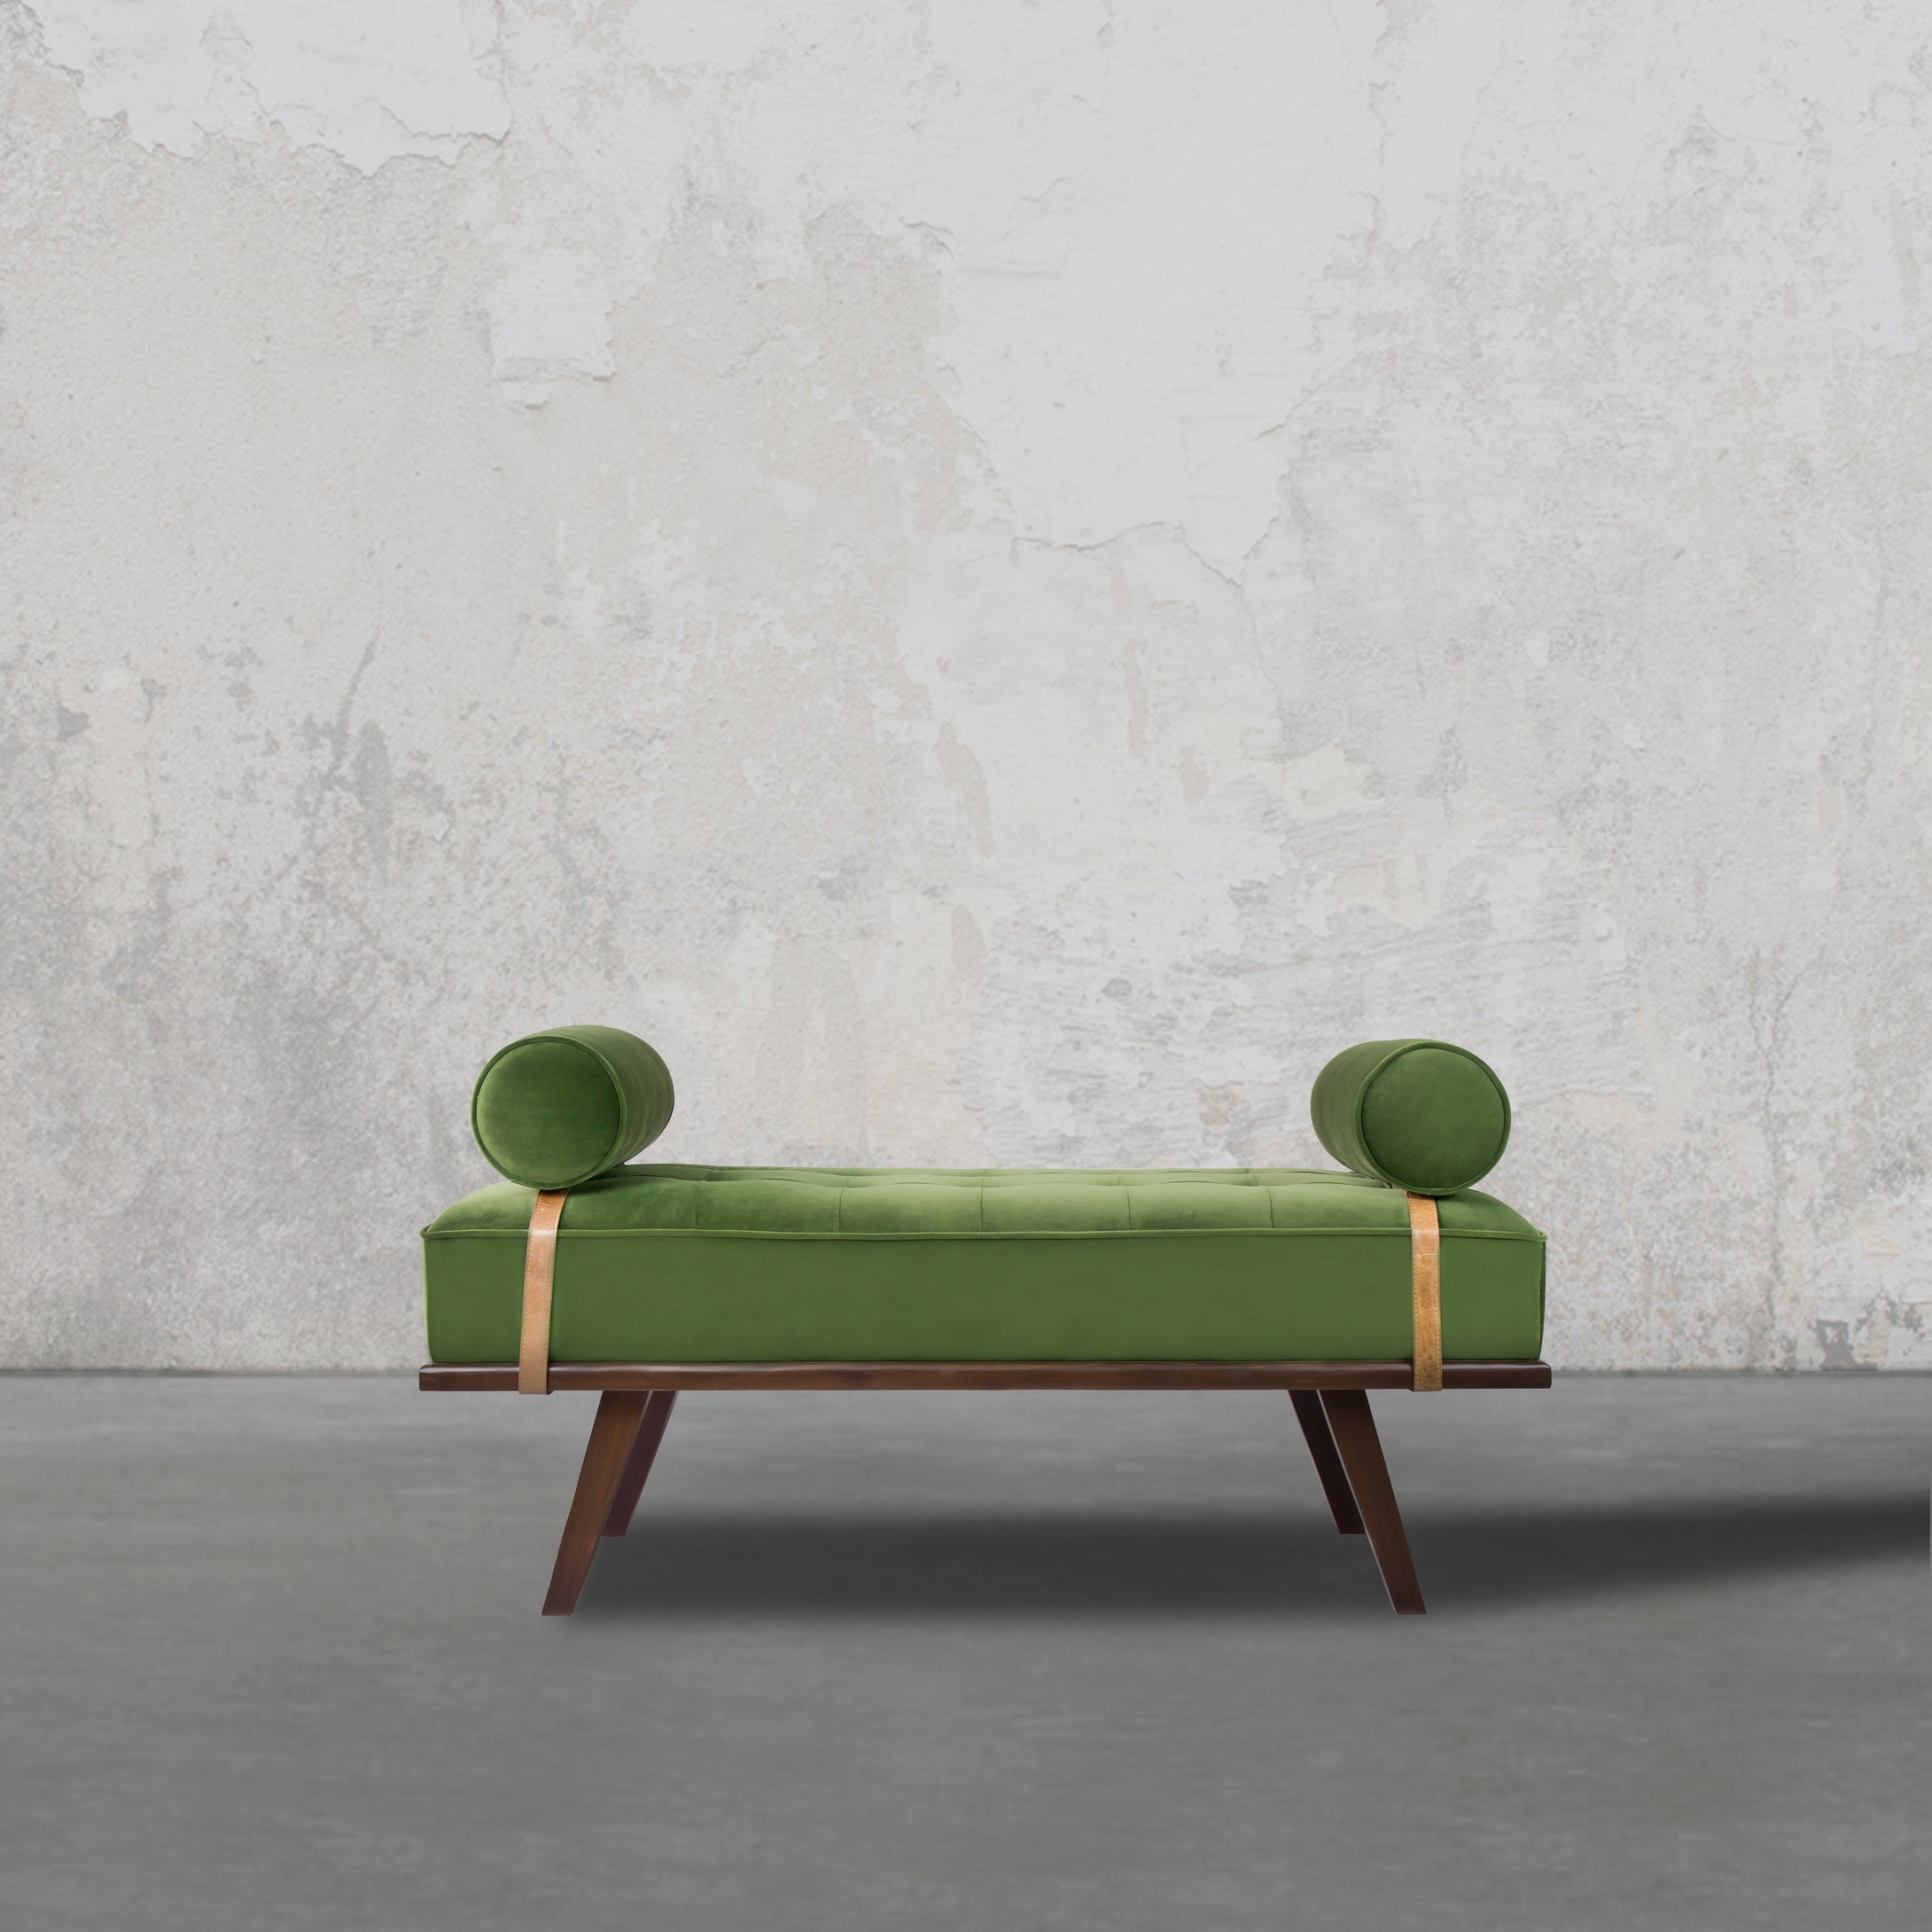 Nordic Bench - Green Fabric